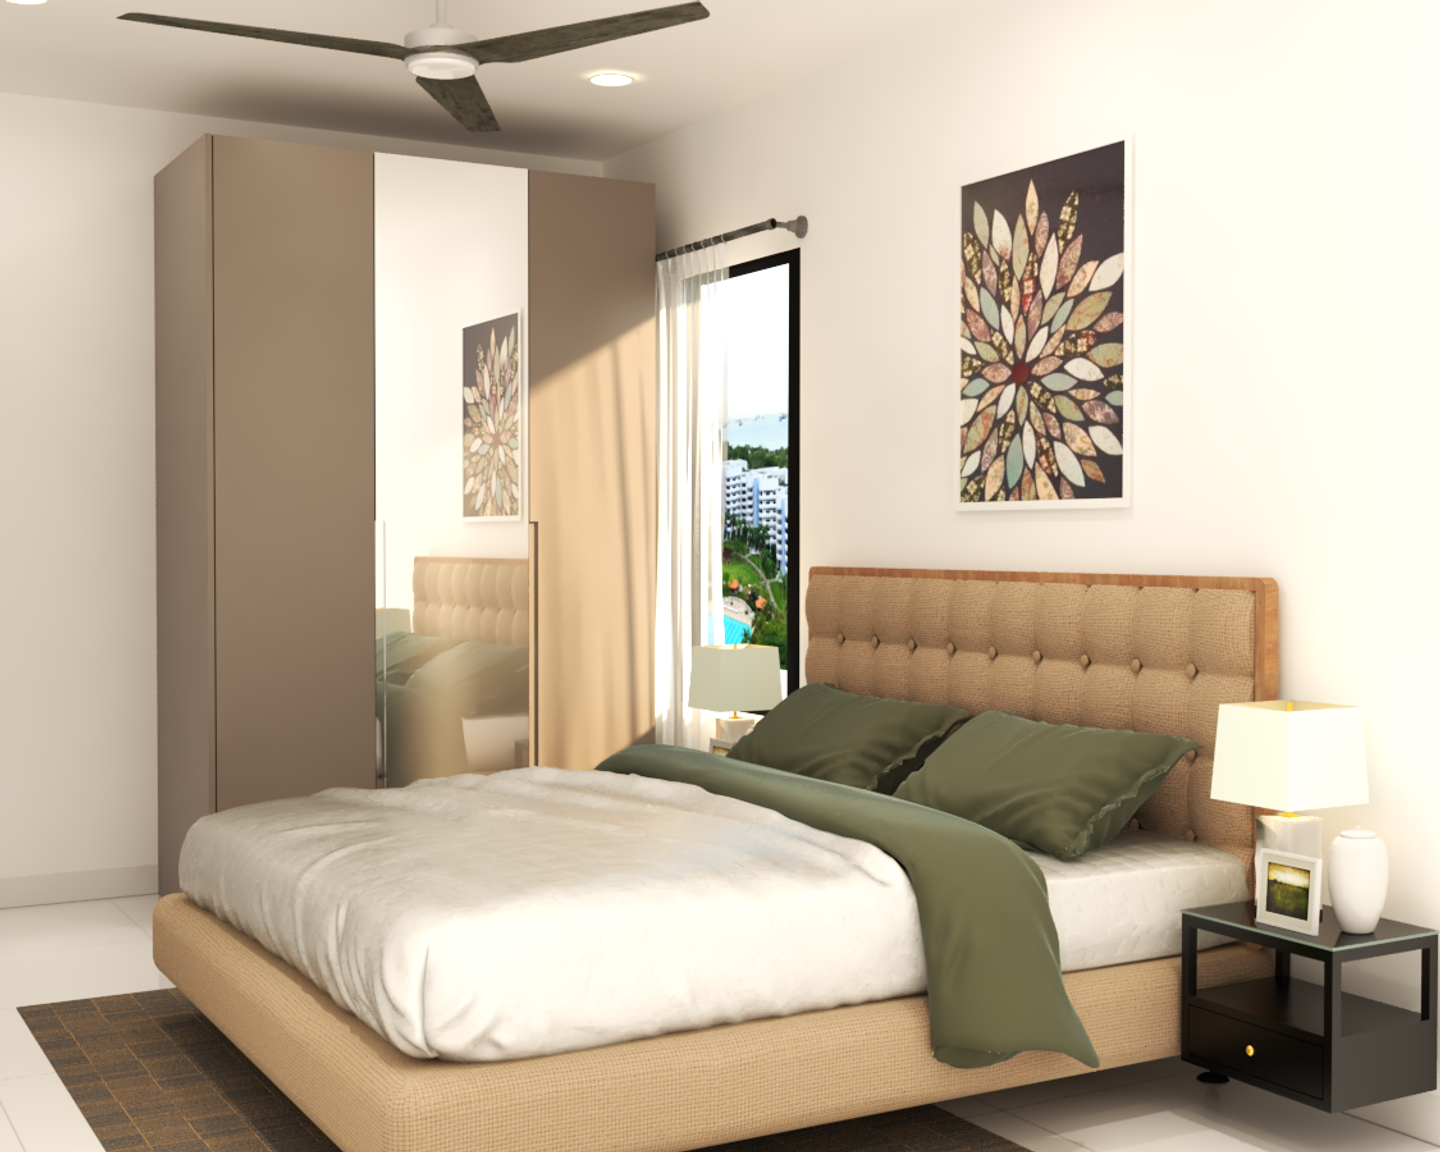 Beige Master Bedroom Interior Design with Mirrored Wardrobe - Livspace